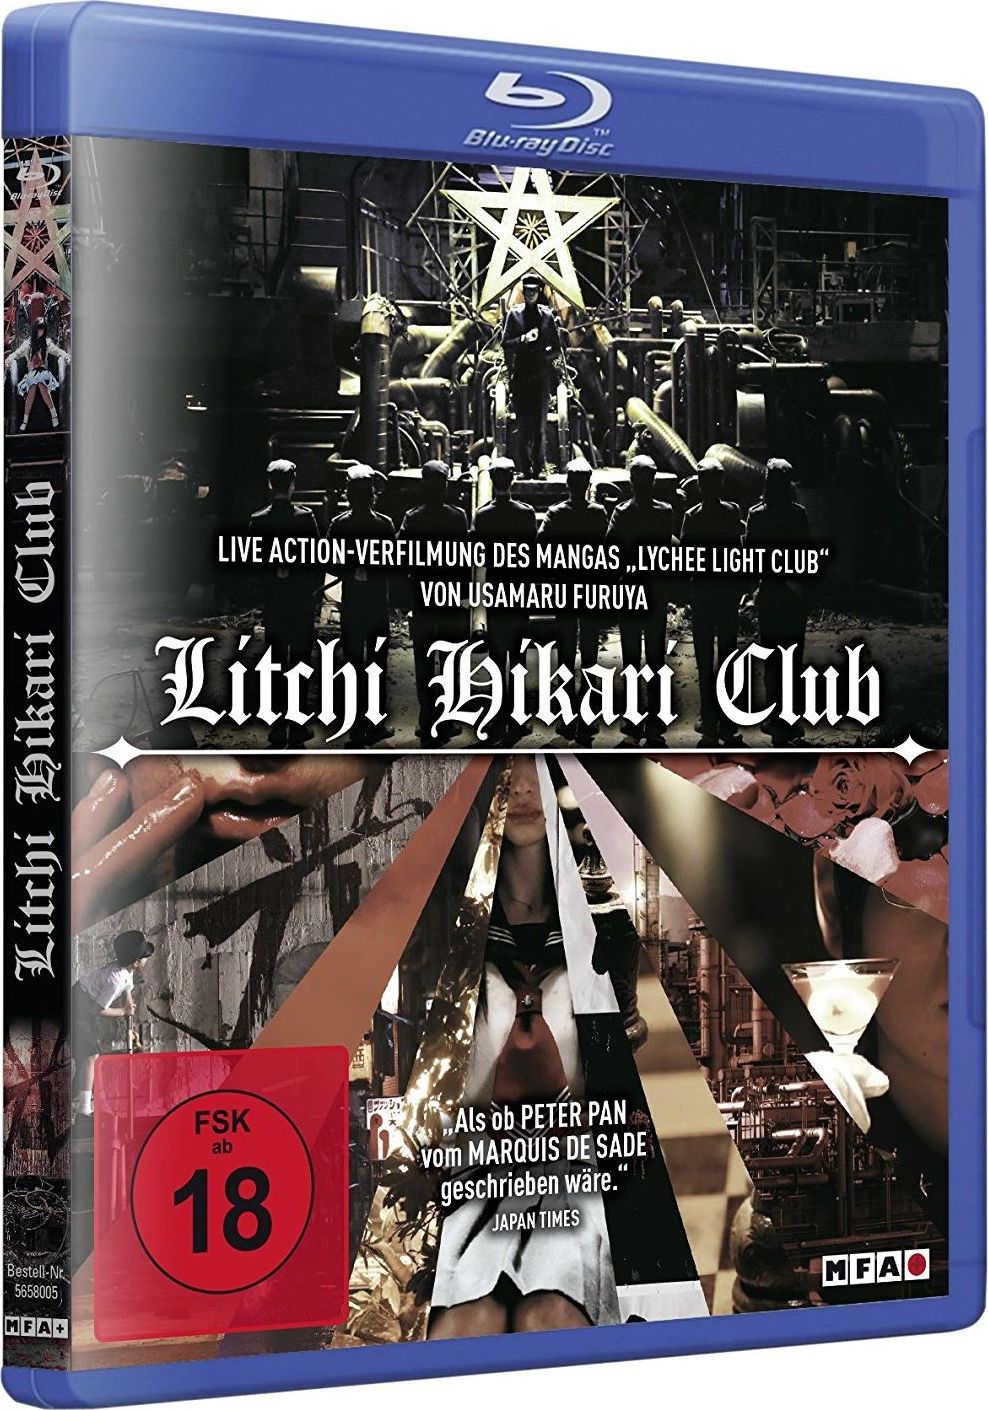 Prime Video: Litchi Hikari Club